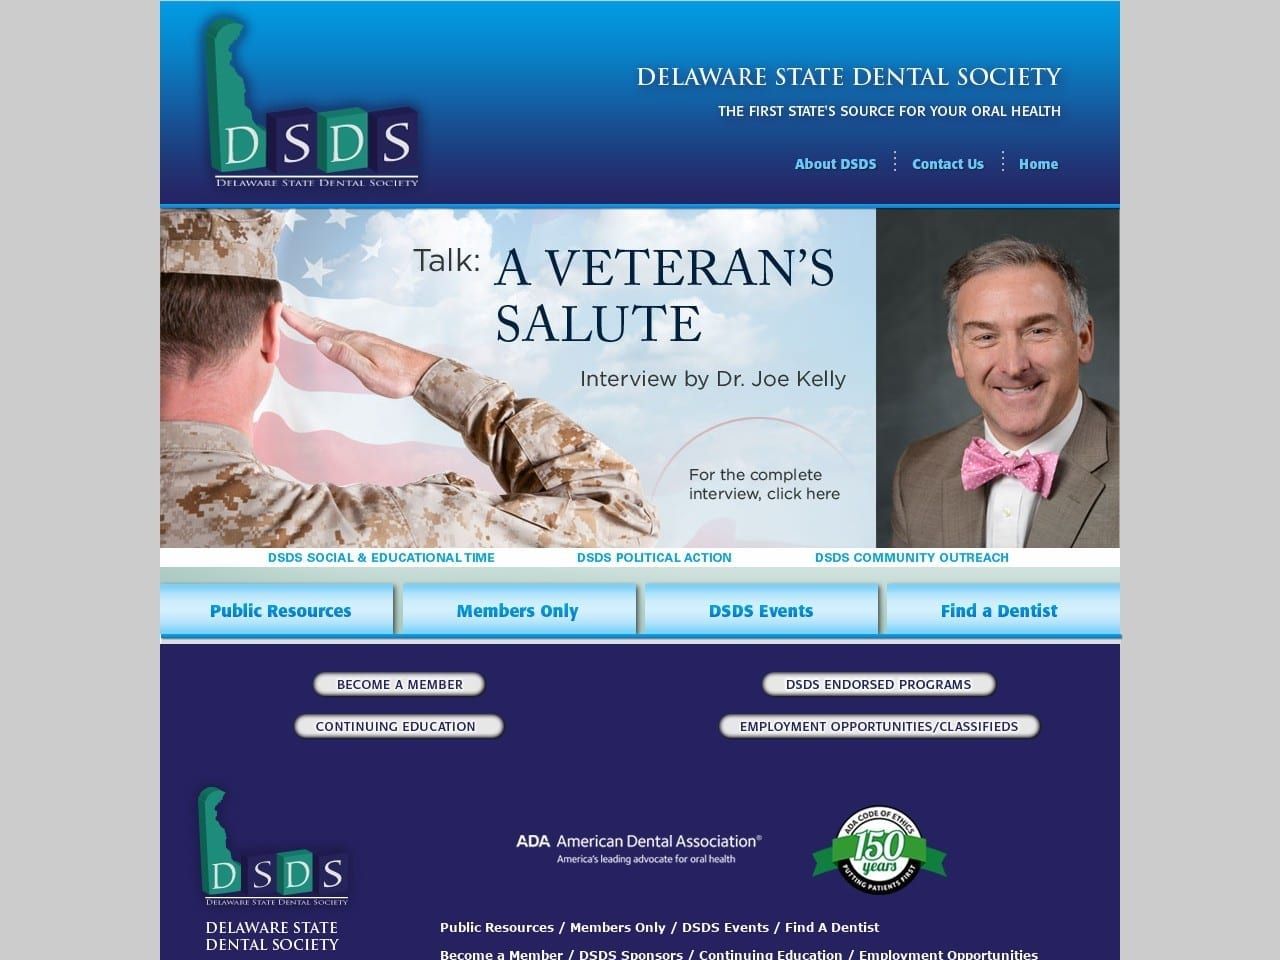 Delaware State Dental Society Website Screenshot from delawarestatedentalsociety.org